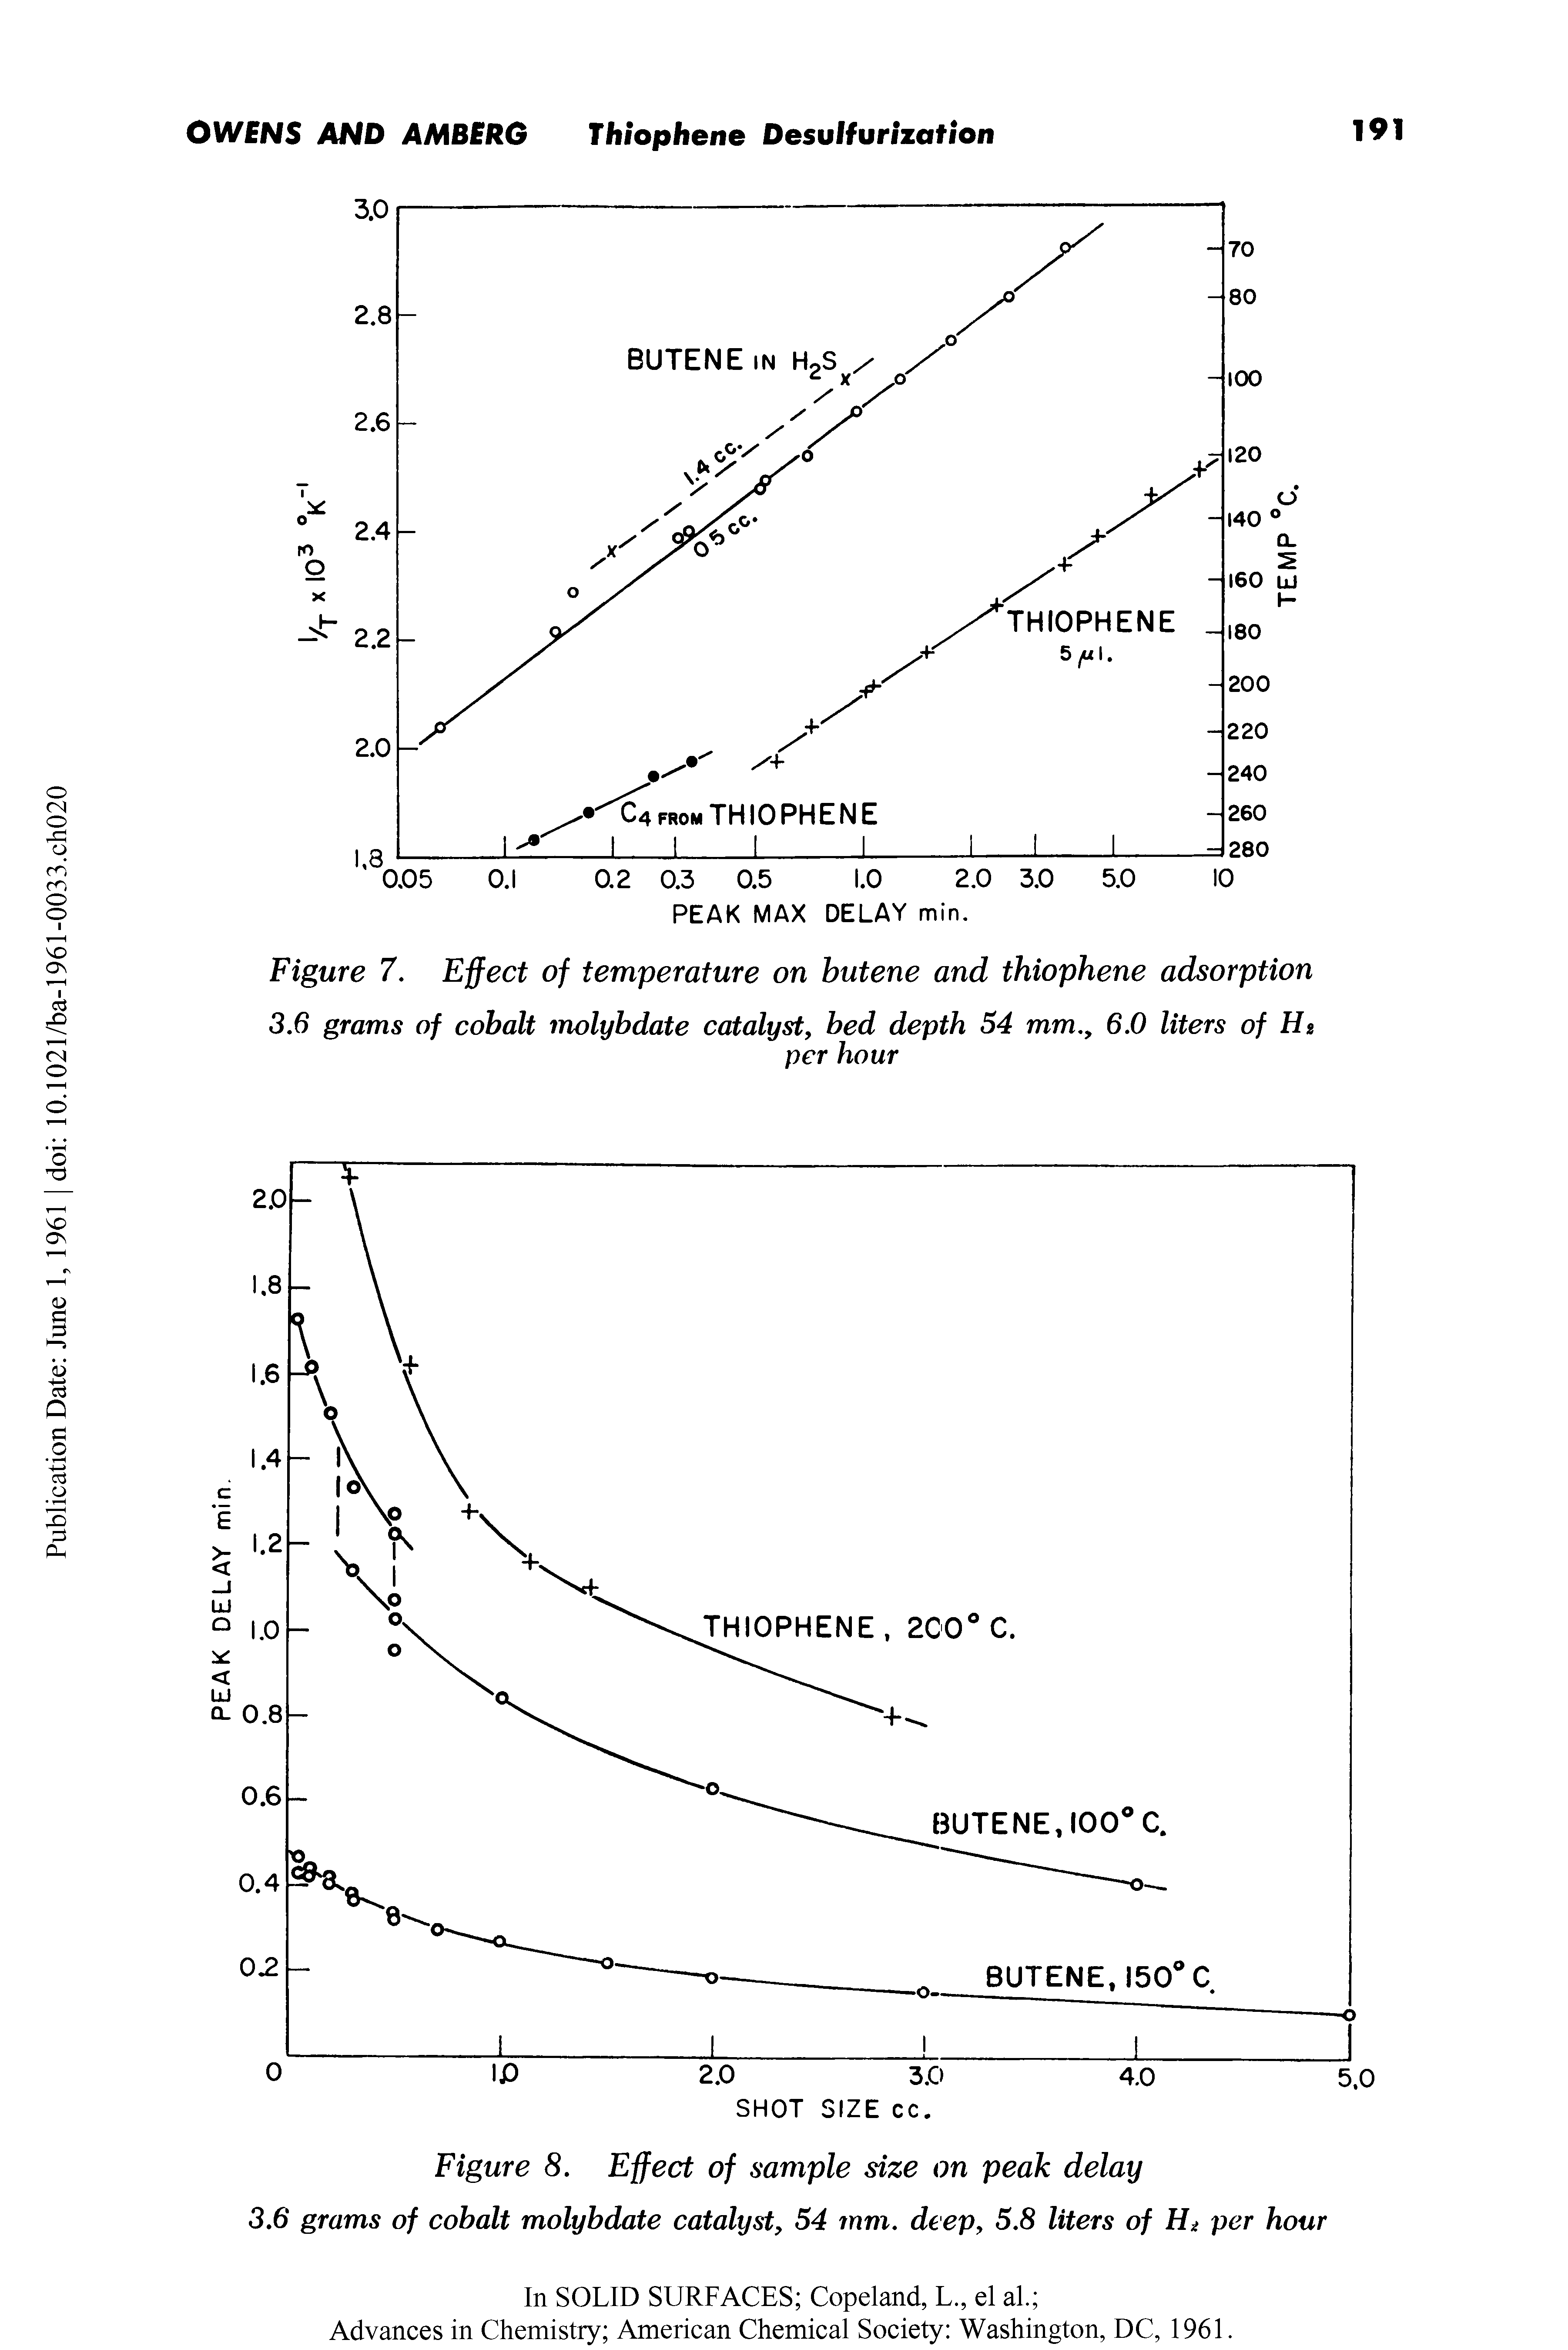 Figure 8. Effect of sample size on peak delay 3.6 grams of cobalt molybdate catalyst, 54 mm. deep, 5.8 liters of H per hour...